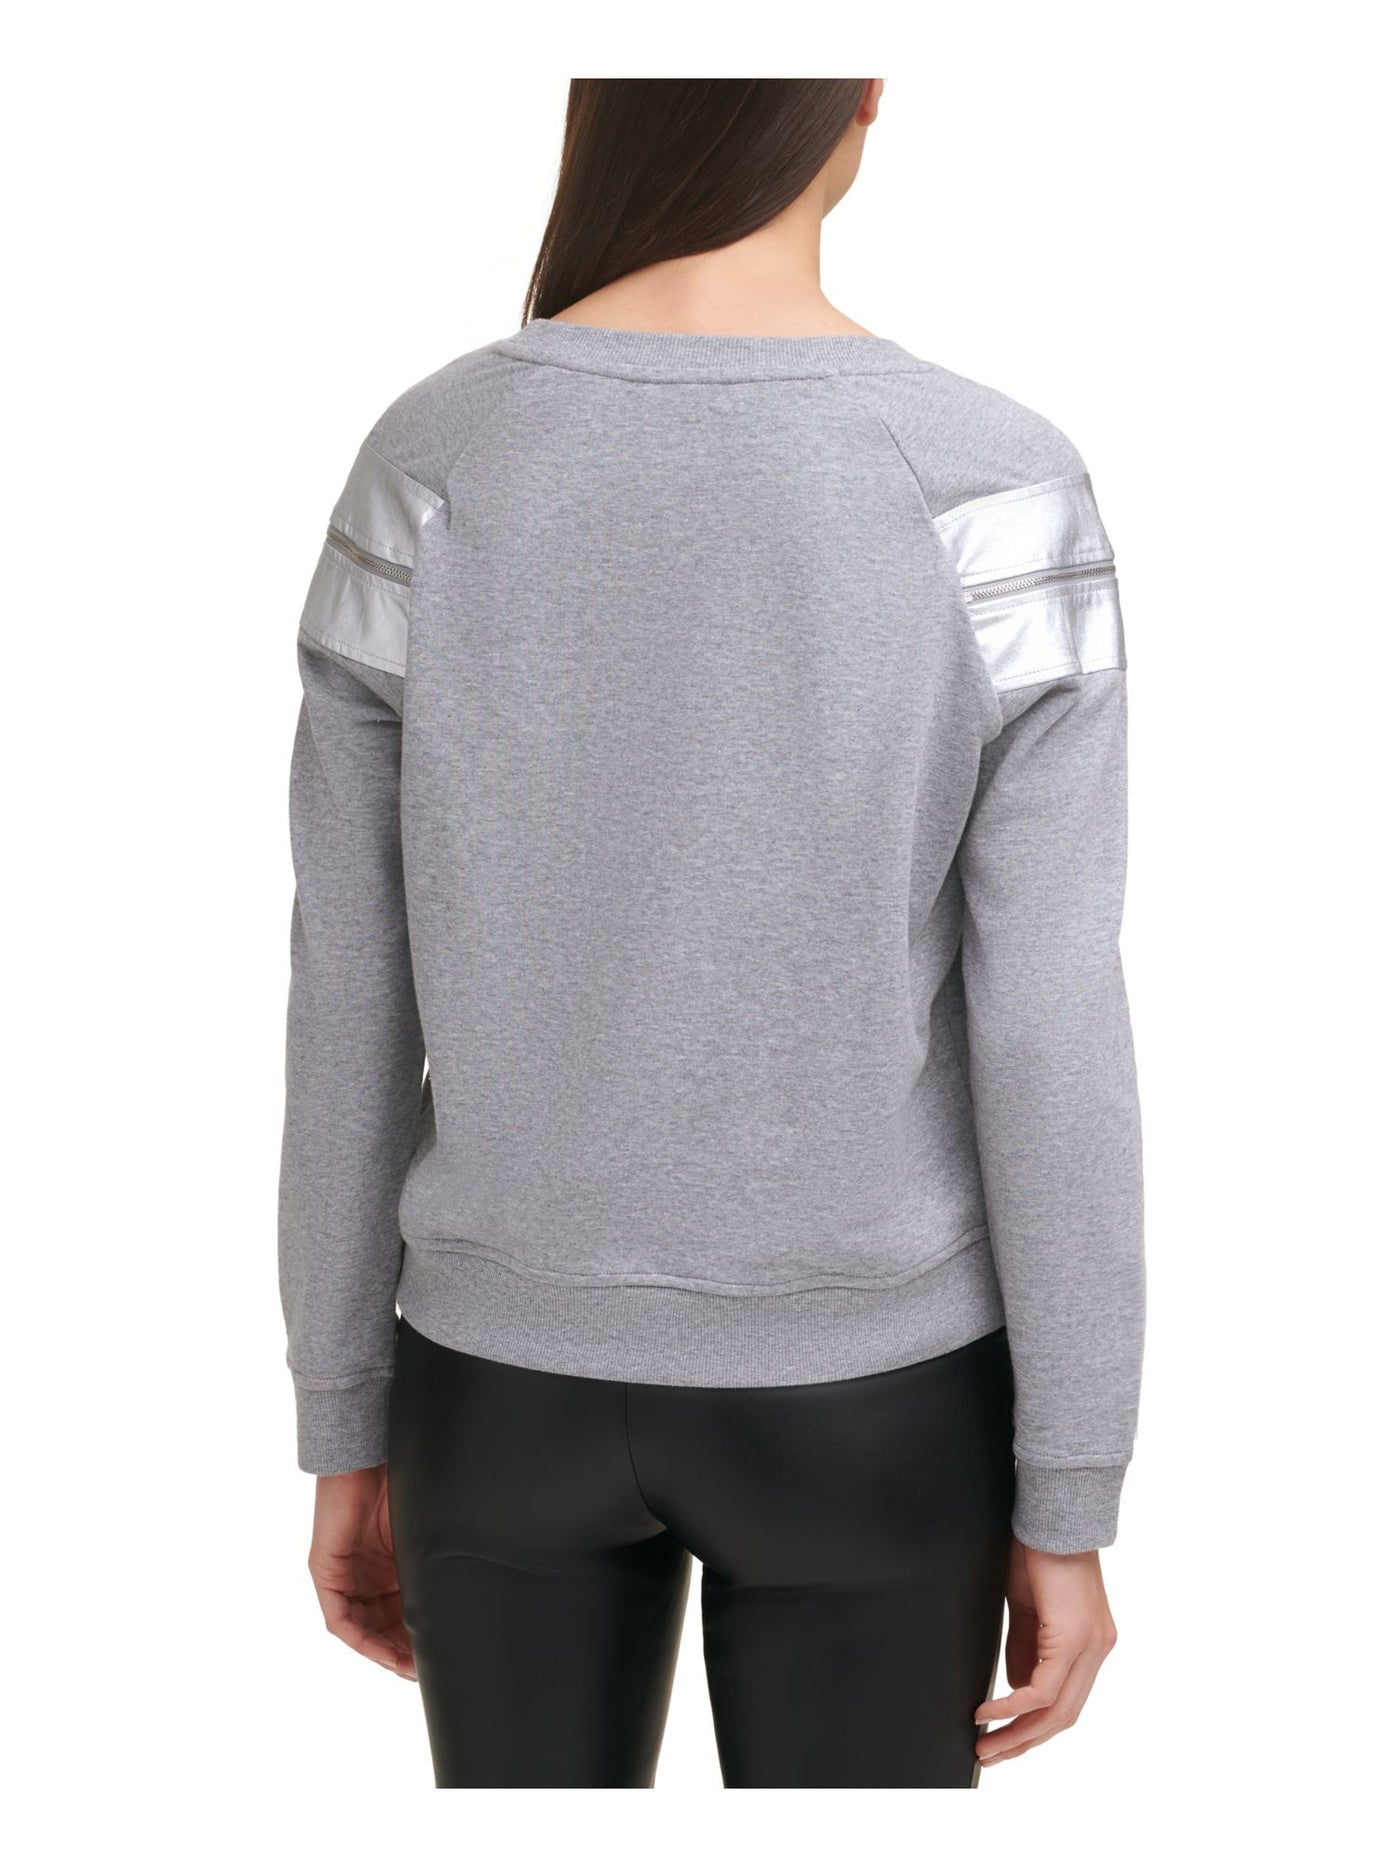 DKNY Womens Gray Zippered Metallic Crewneck Sweatshirt S